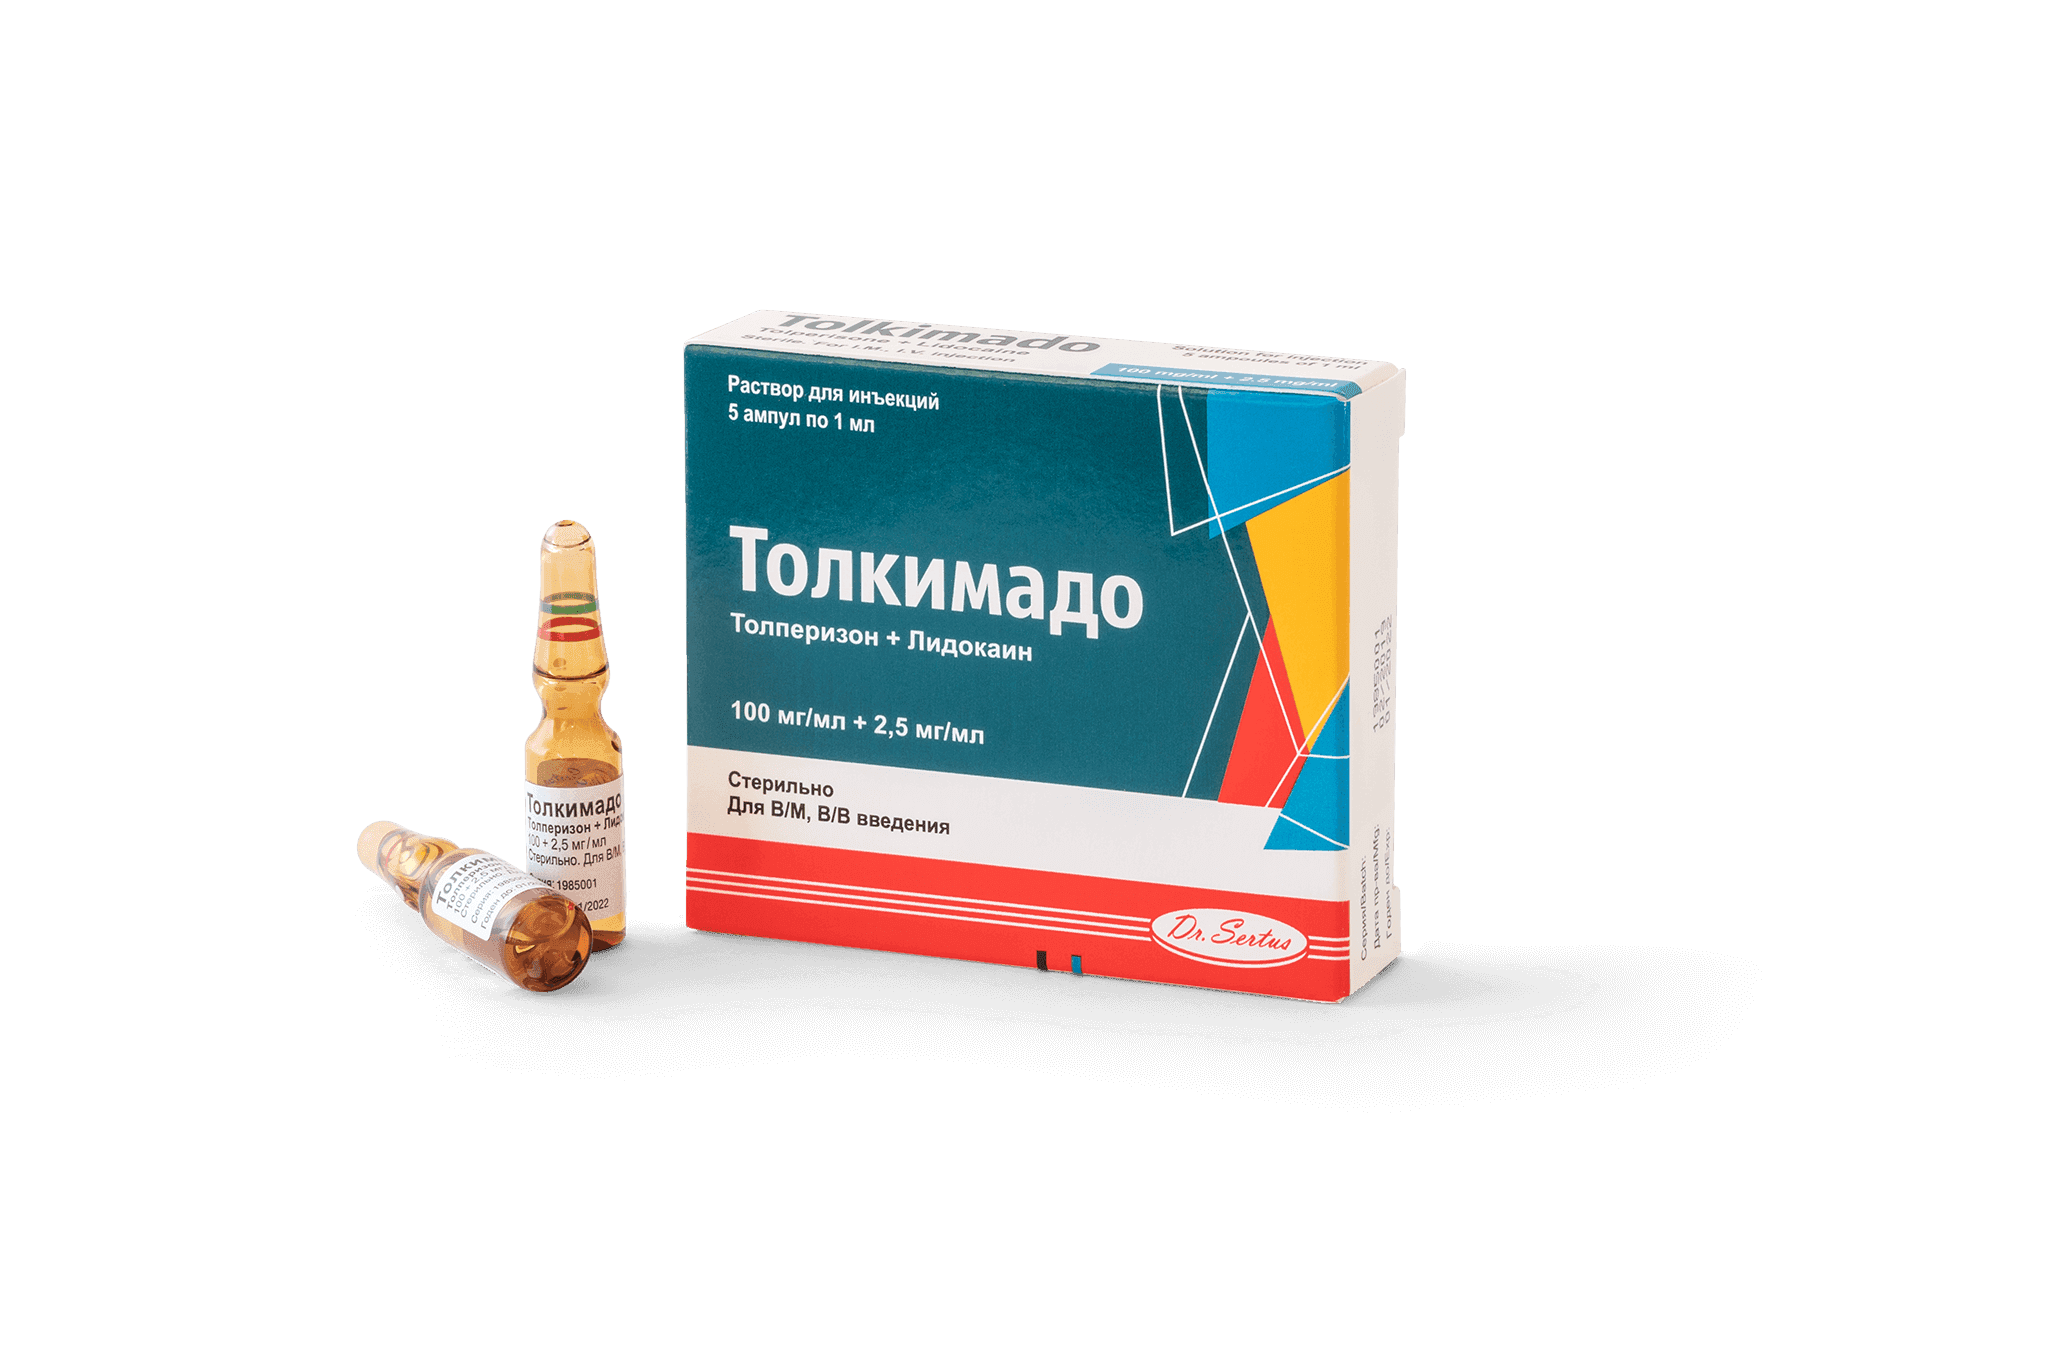 TOLKIMADO inyeksiya uchun eritma 1ml 100 mg/ml+2,5 mg/ml N5